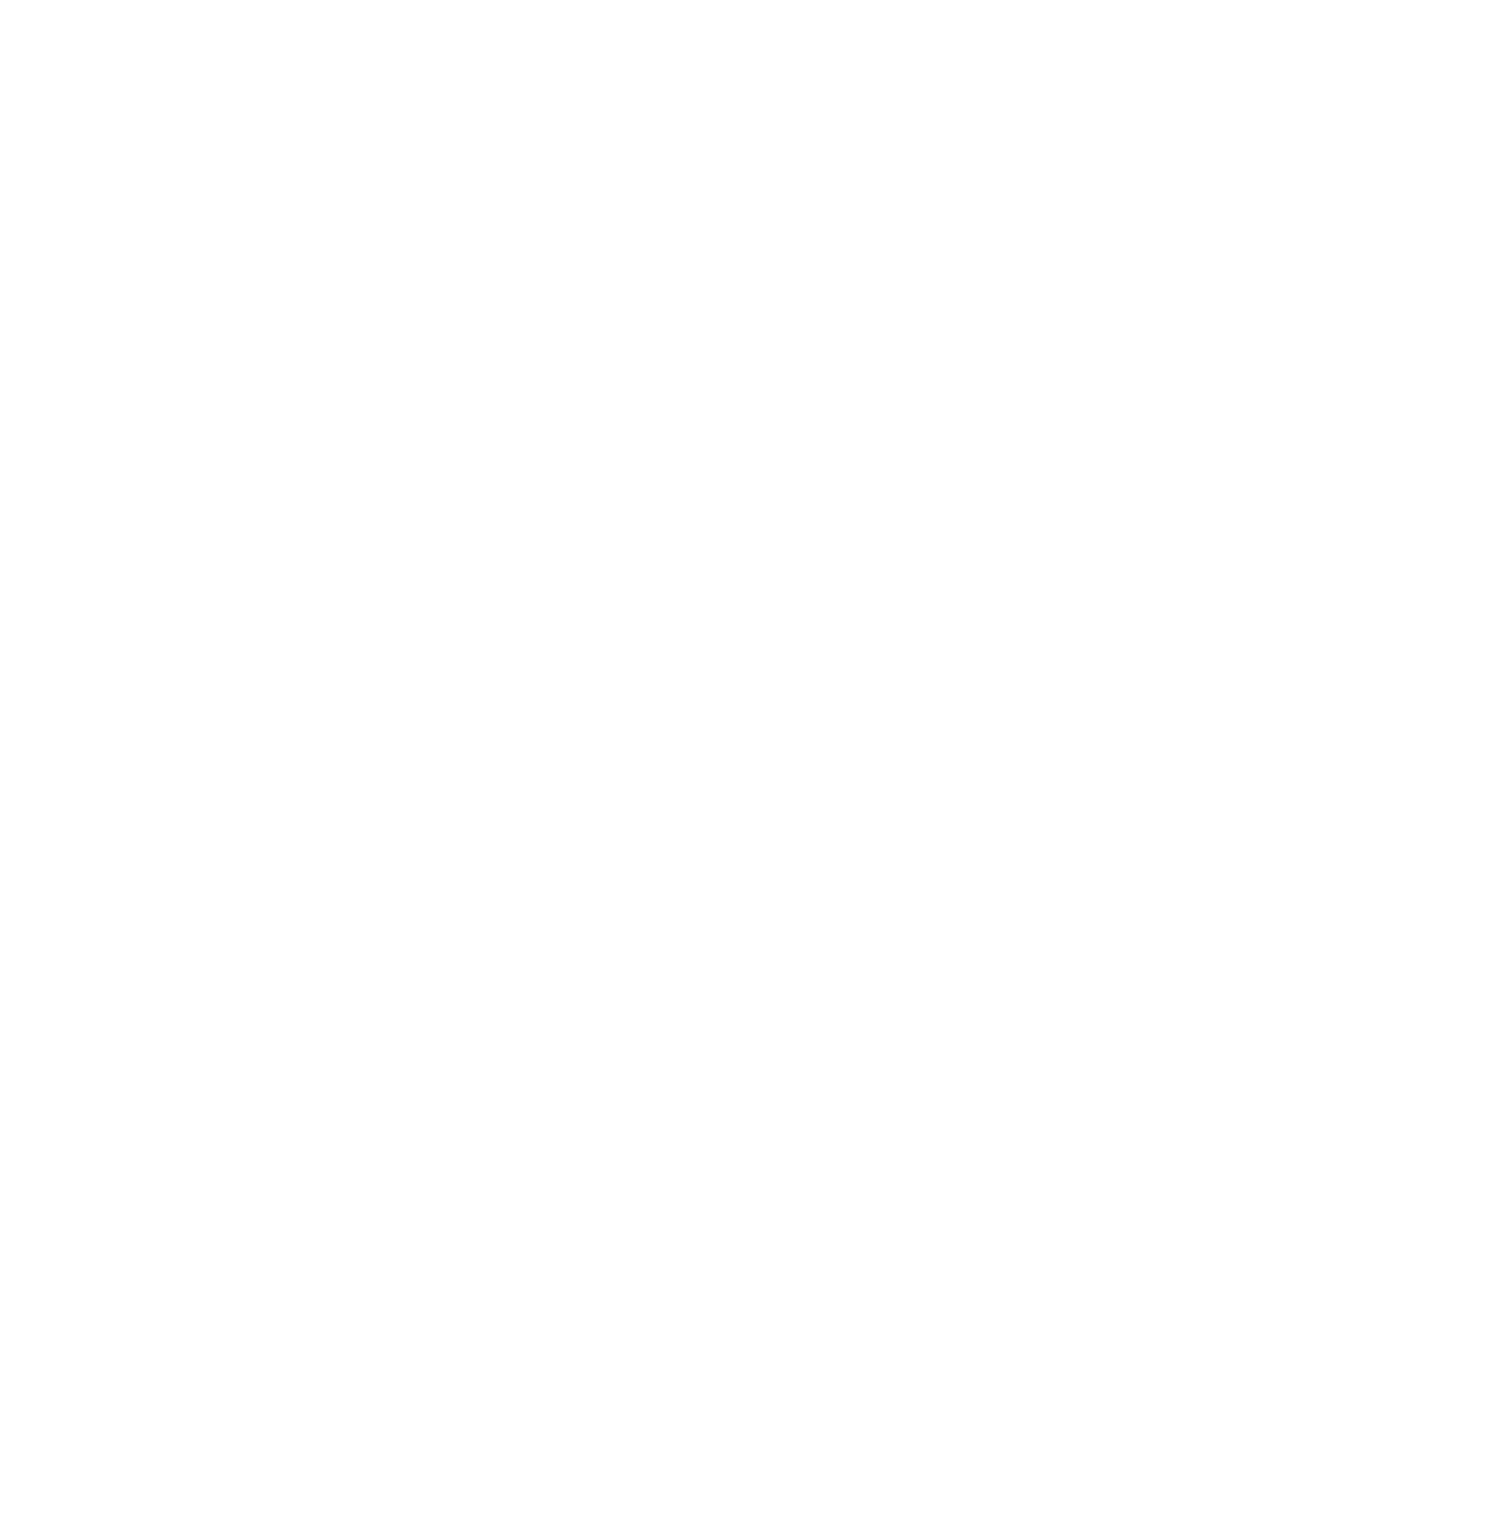 ENDASHATA